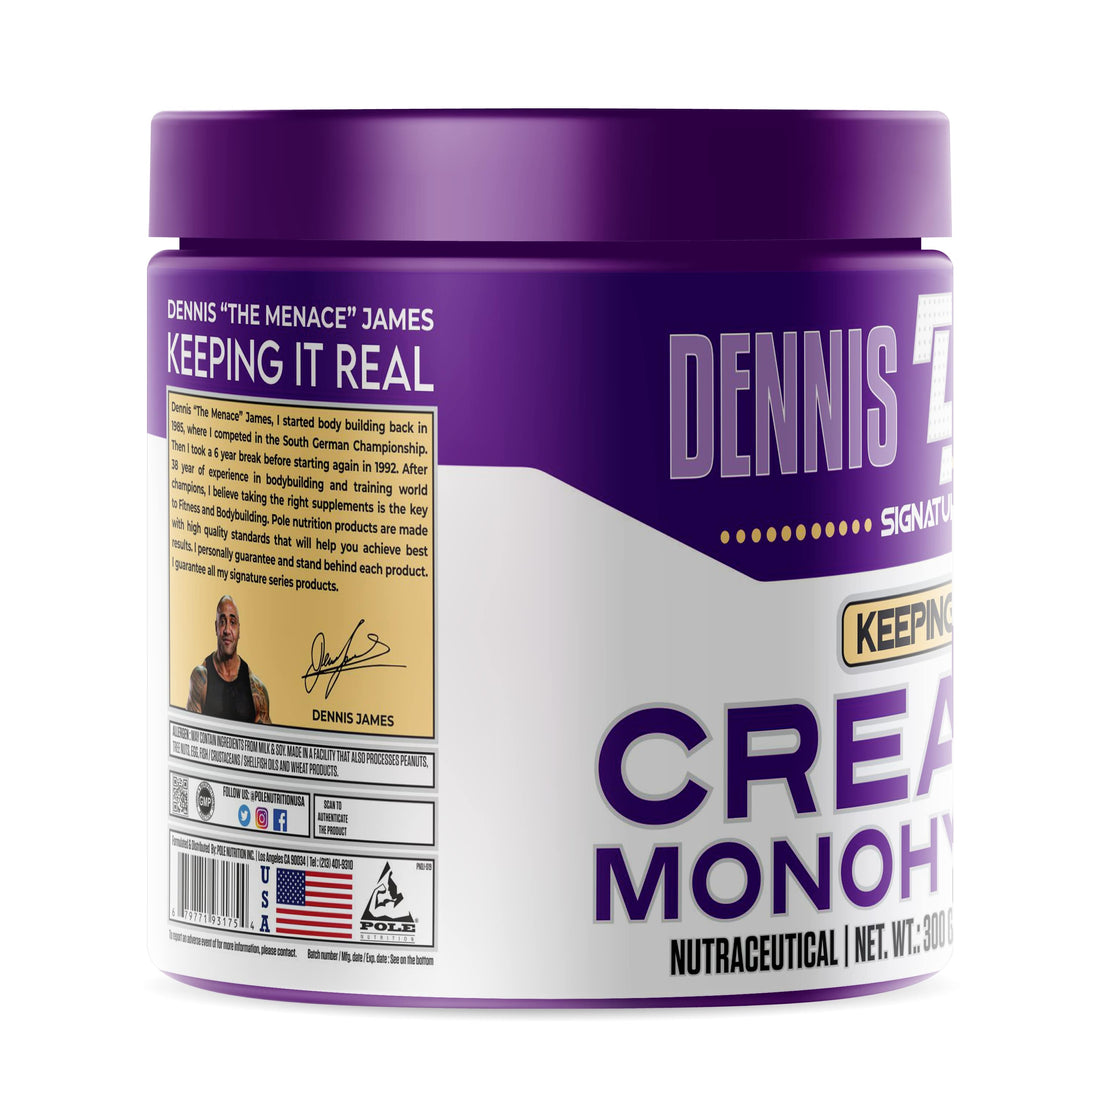 Dennis James Signature Series Creatine Monohydrate (100 Servings)